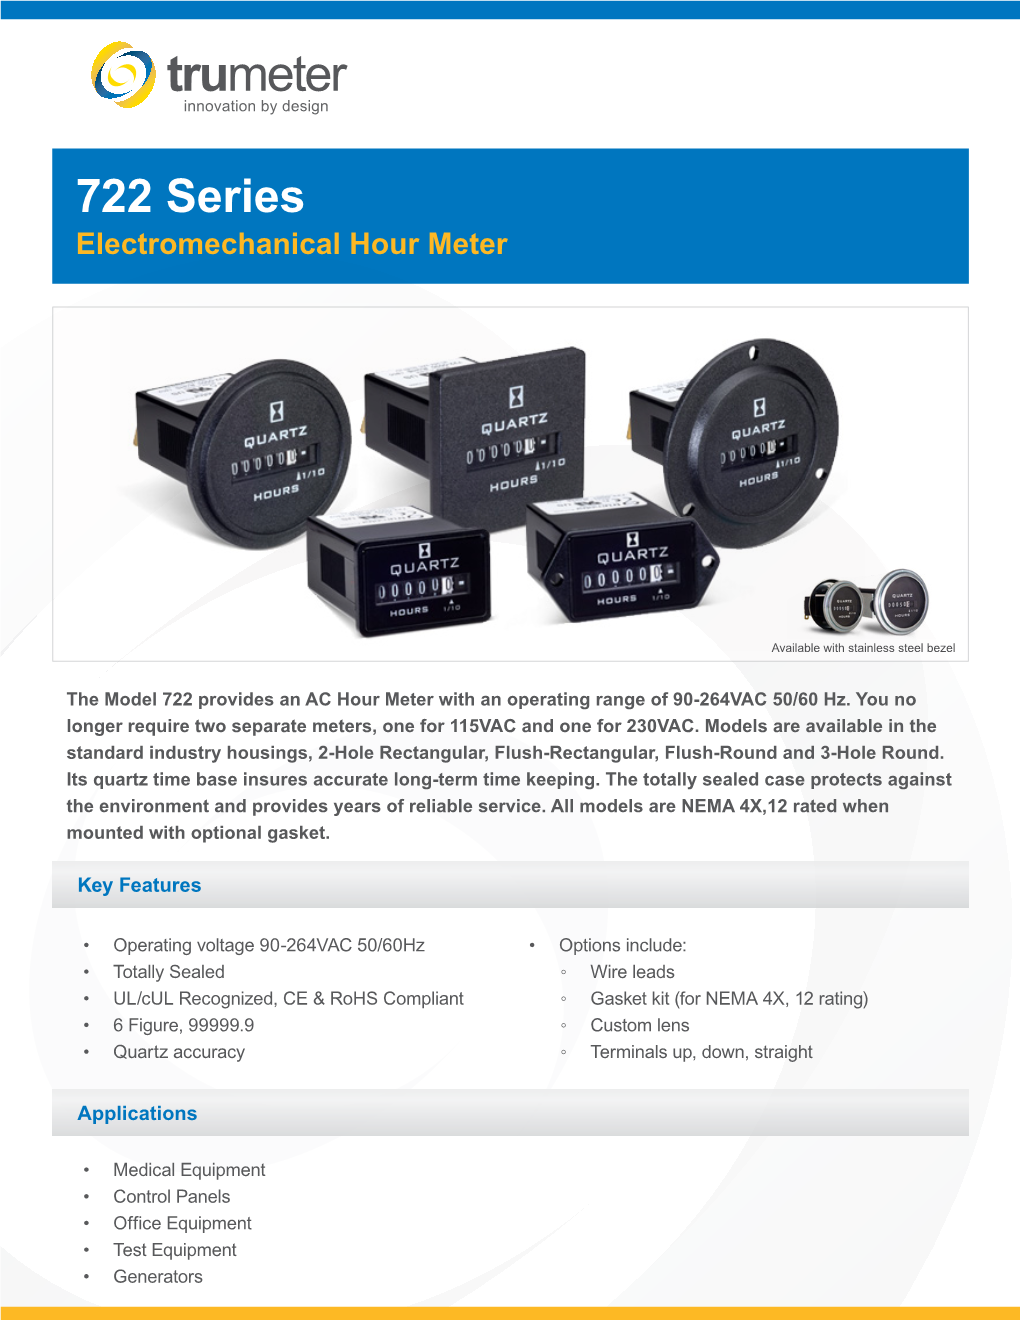 722 Series Electromechanical Hour Meter